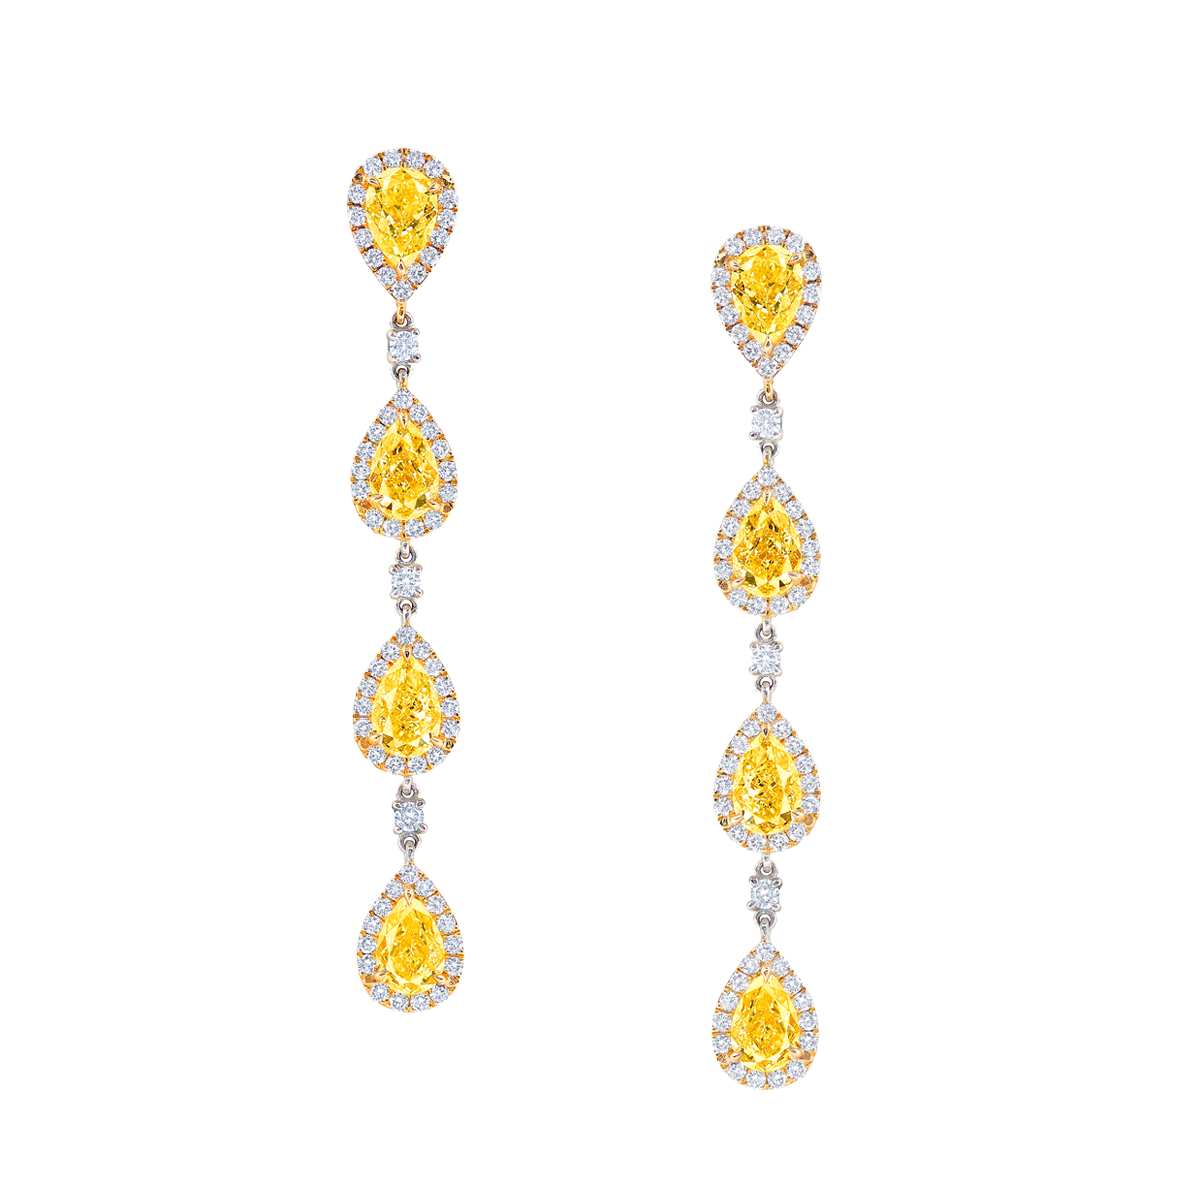 GIA 3.76克拉 黃鑽耳環
Fancy Intense Yellow Colored 
Diamond and Diamond Earrings